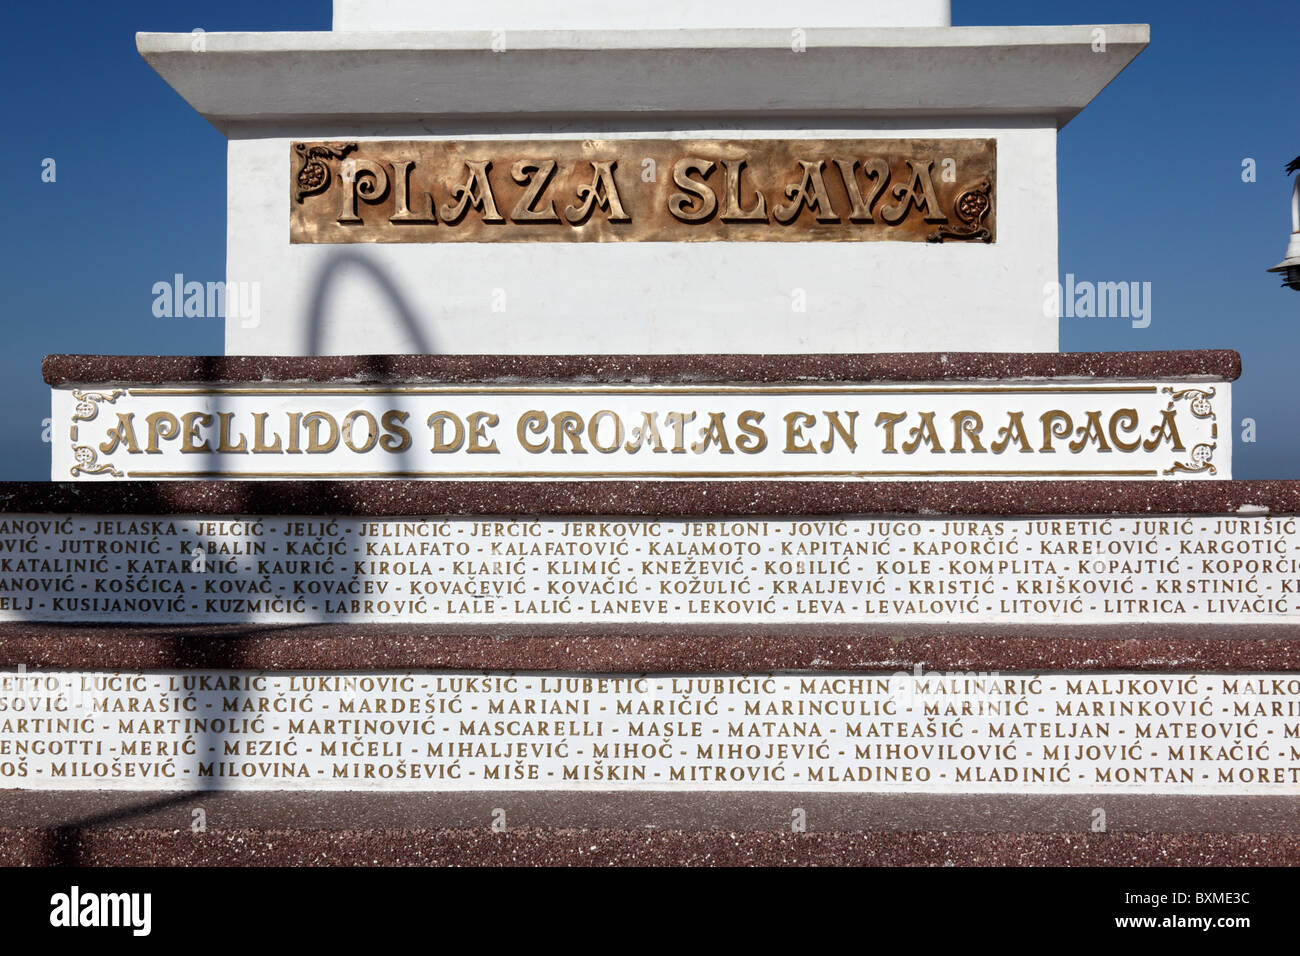 Detail of monument to Croatian immigrants in Tarapaca region, Plaza Slava, Iquique , Region I, Chile Stock Photo